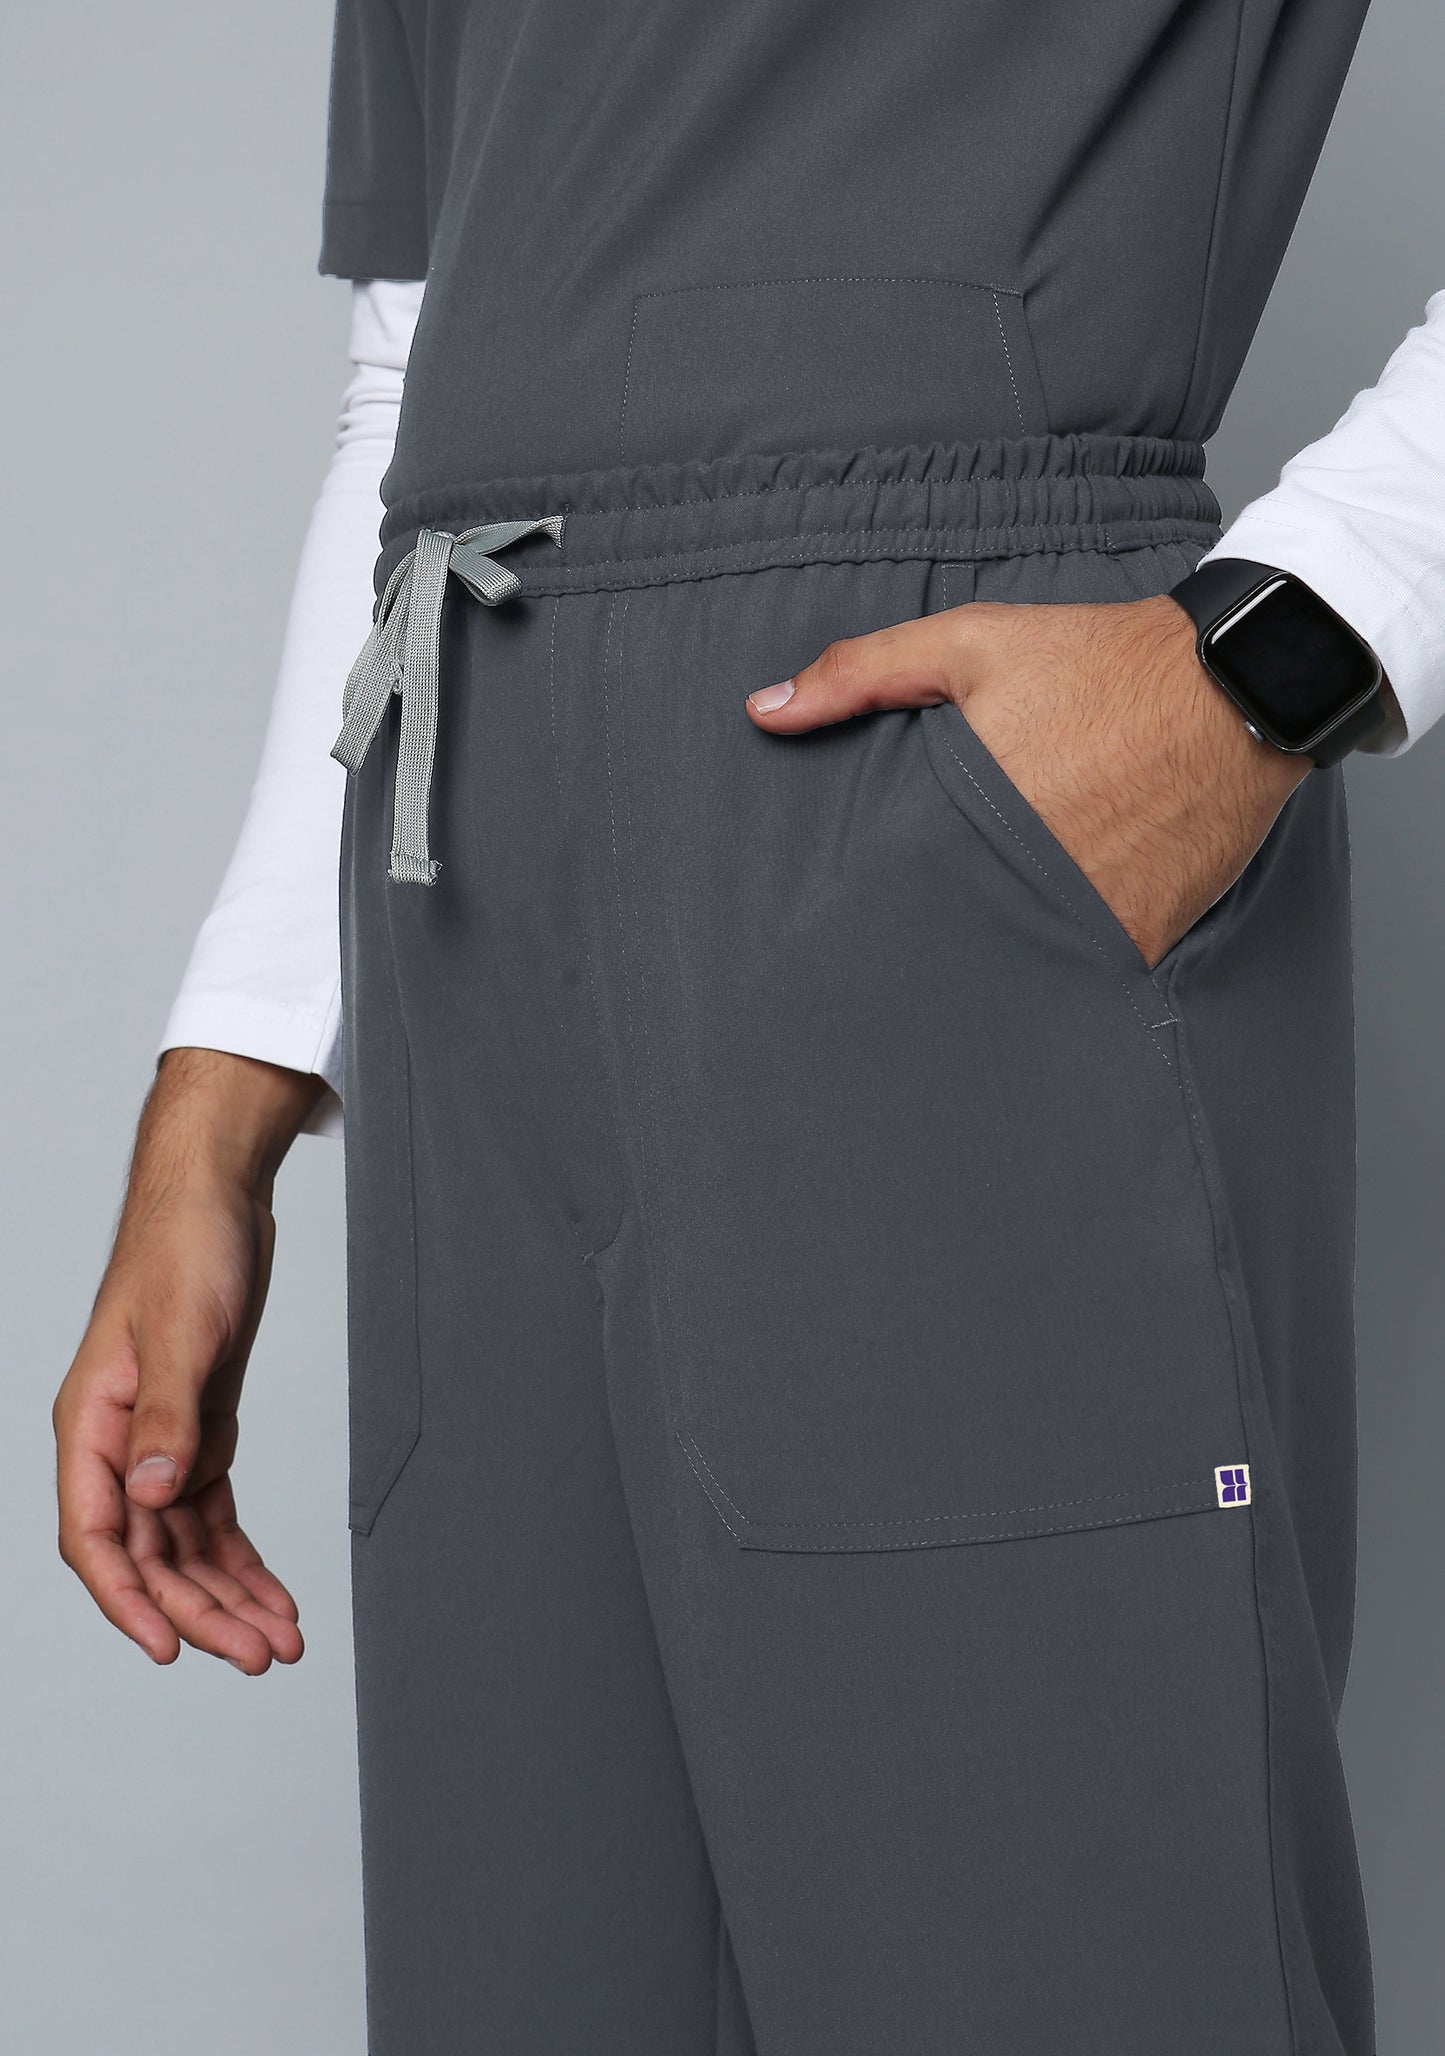 Ecoflex Men's 5 Pocket (Steel Grey) Scrub